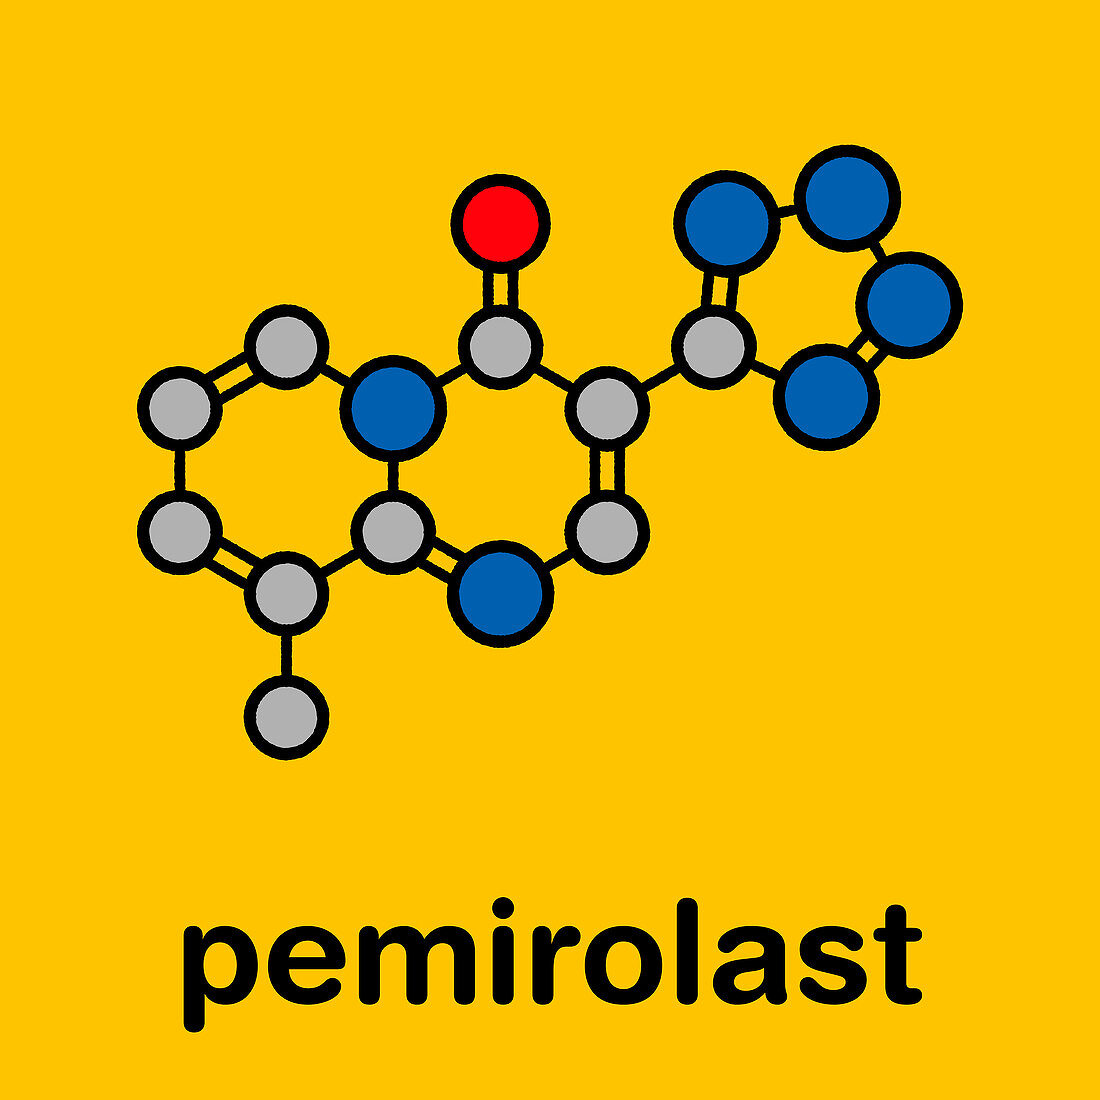 Pemirolast eye allergy drug, molecular model